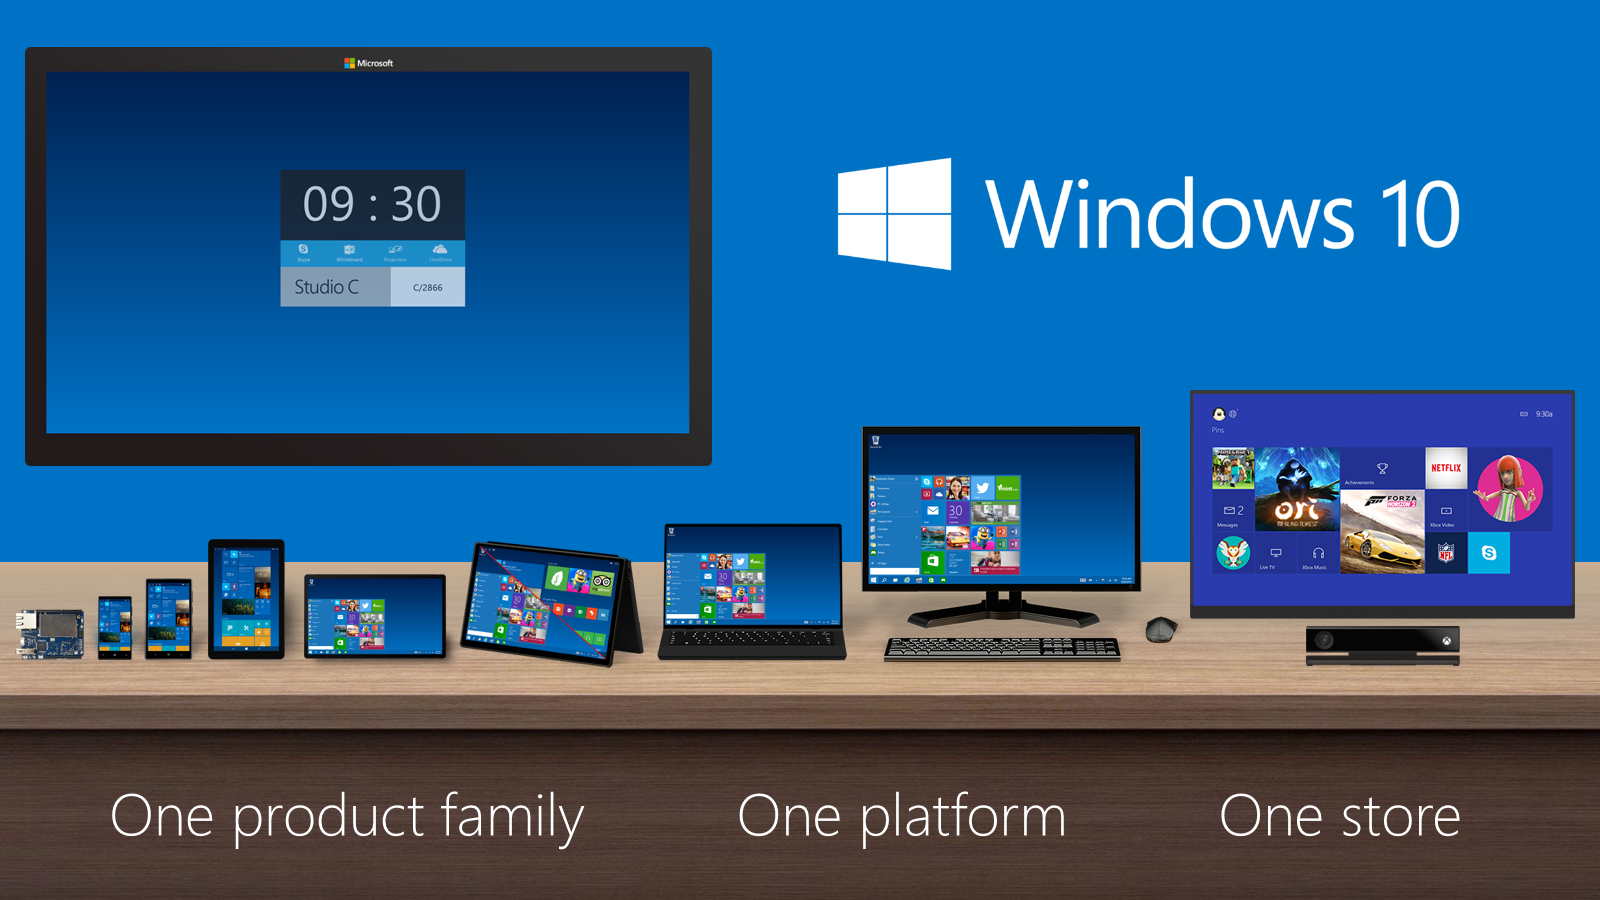 Microsoft has abandoned Windows 9